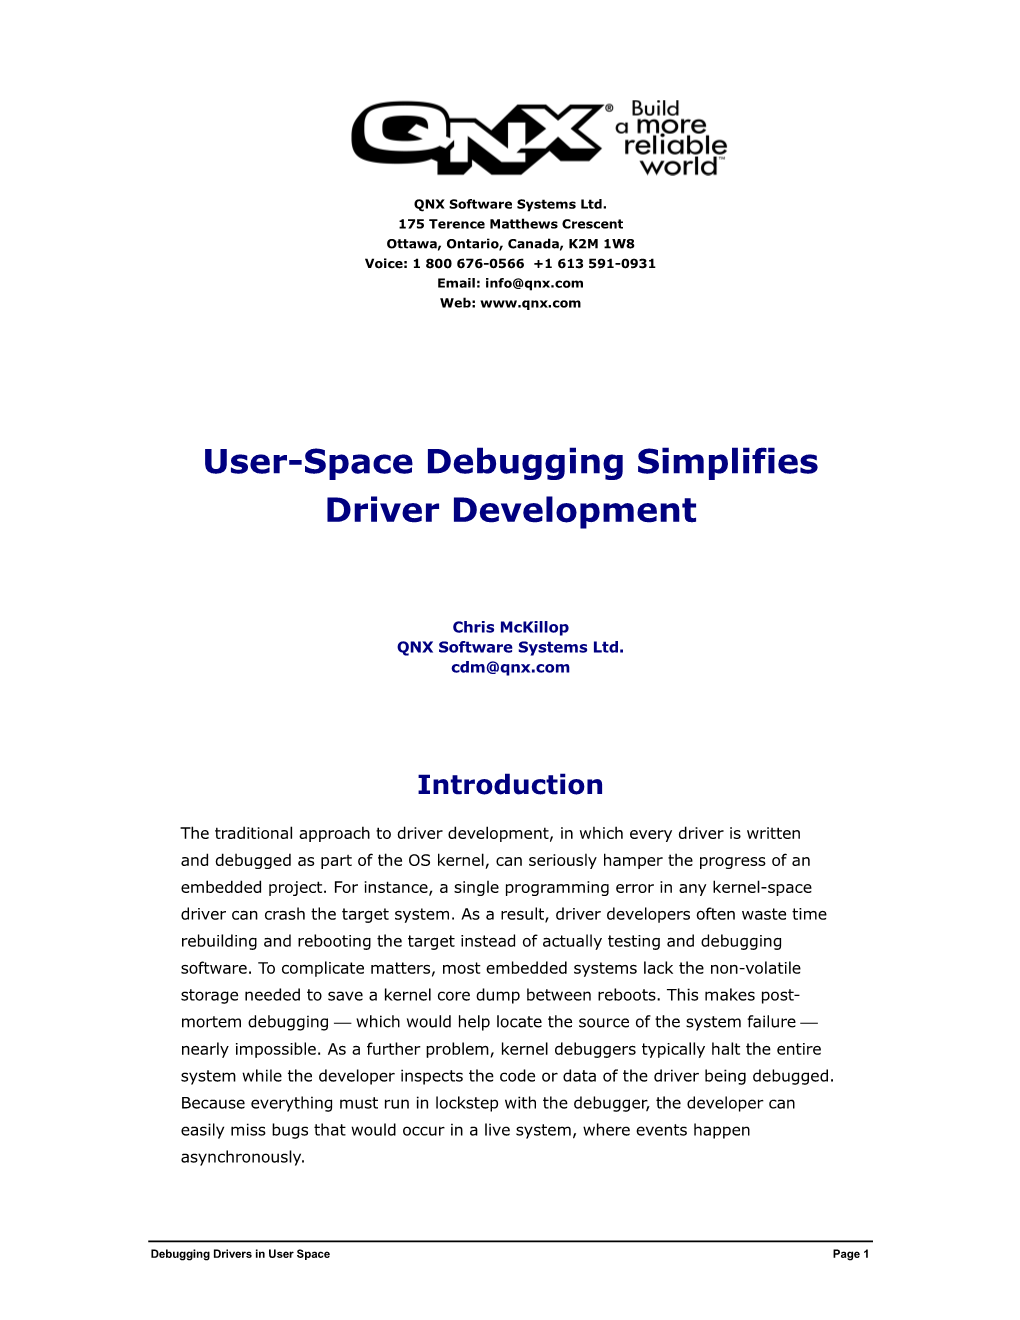 User-Space Debugging Simplifies Driver Development